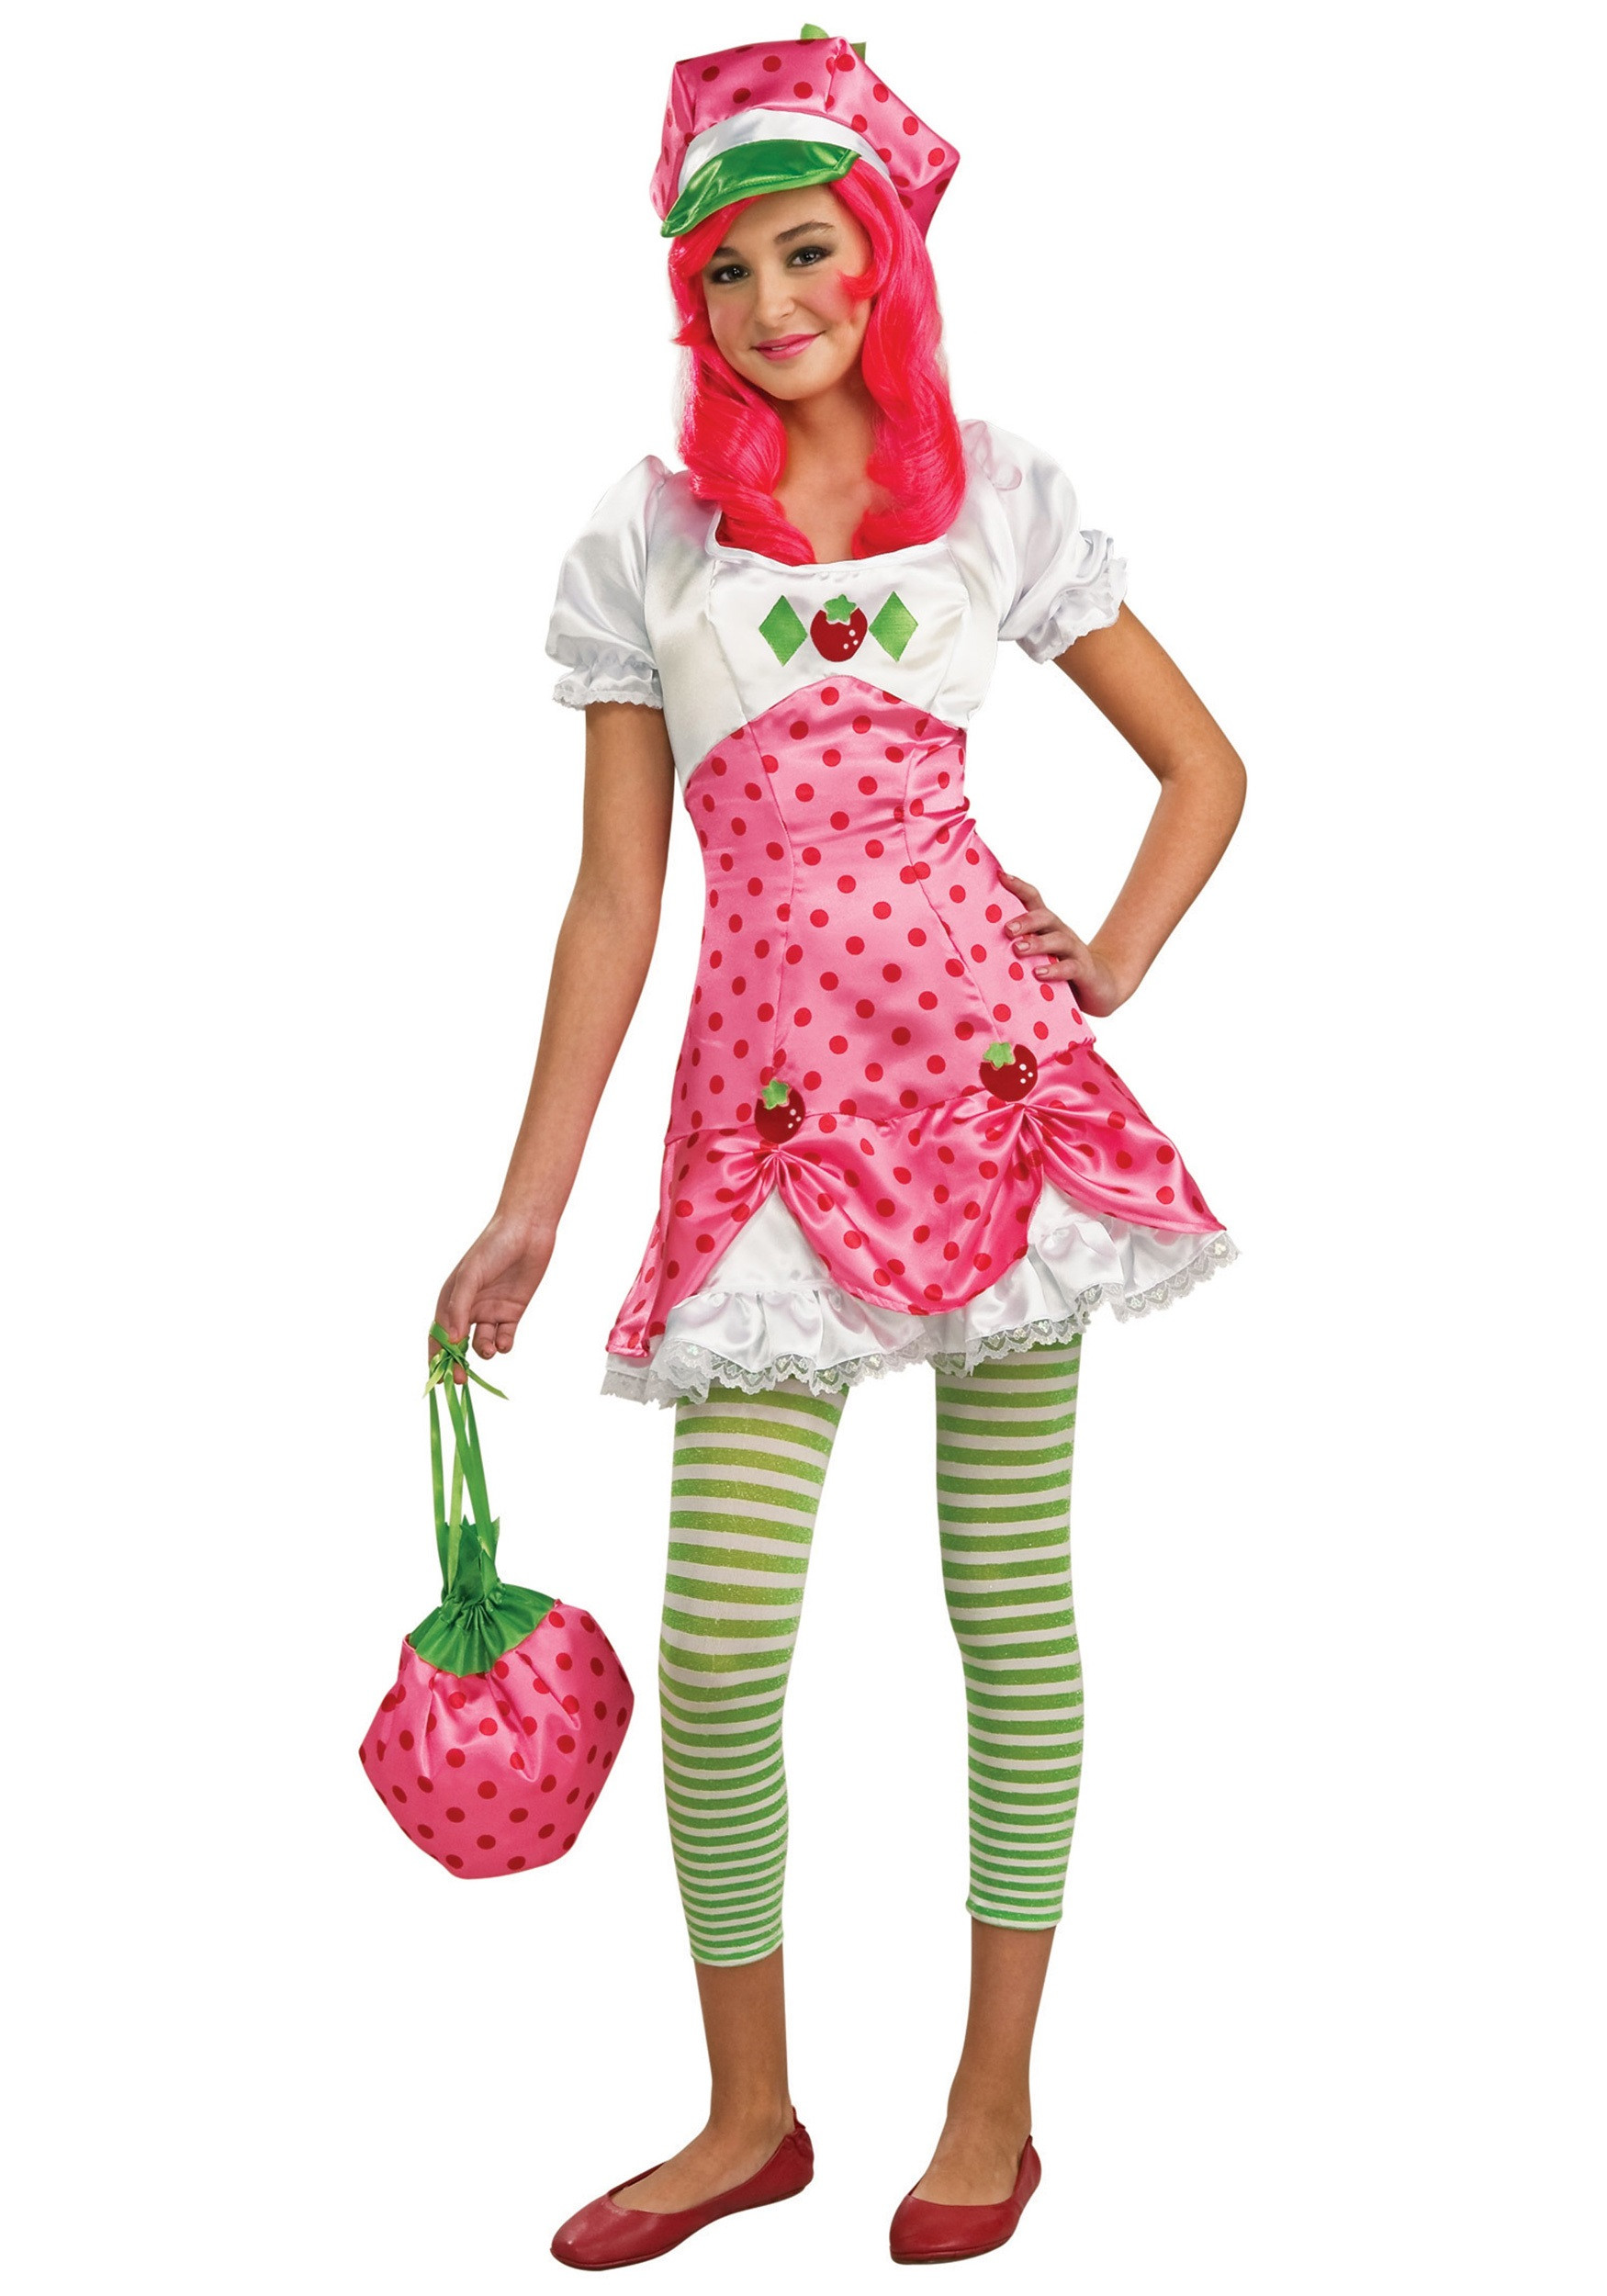 Strawberry Shortcake Costume Kids
 Deluxe Strawberry Shortcake Costume Kids Tween Halloween